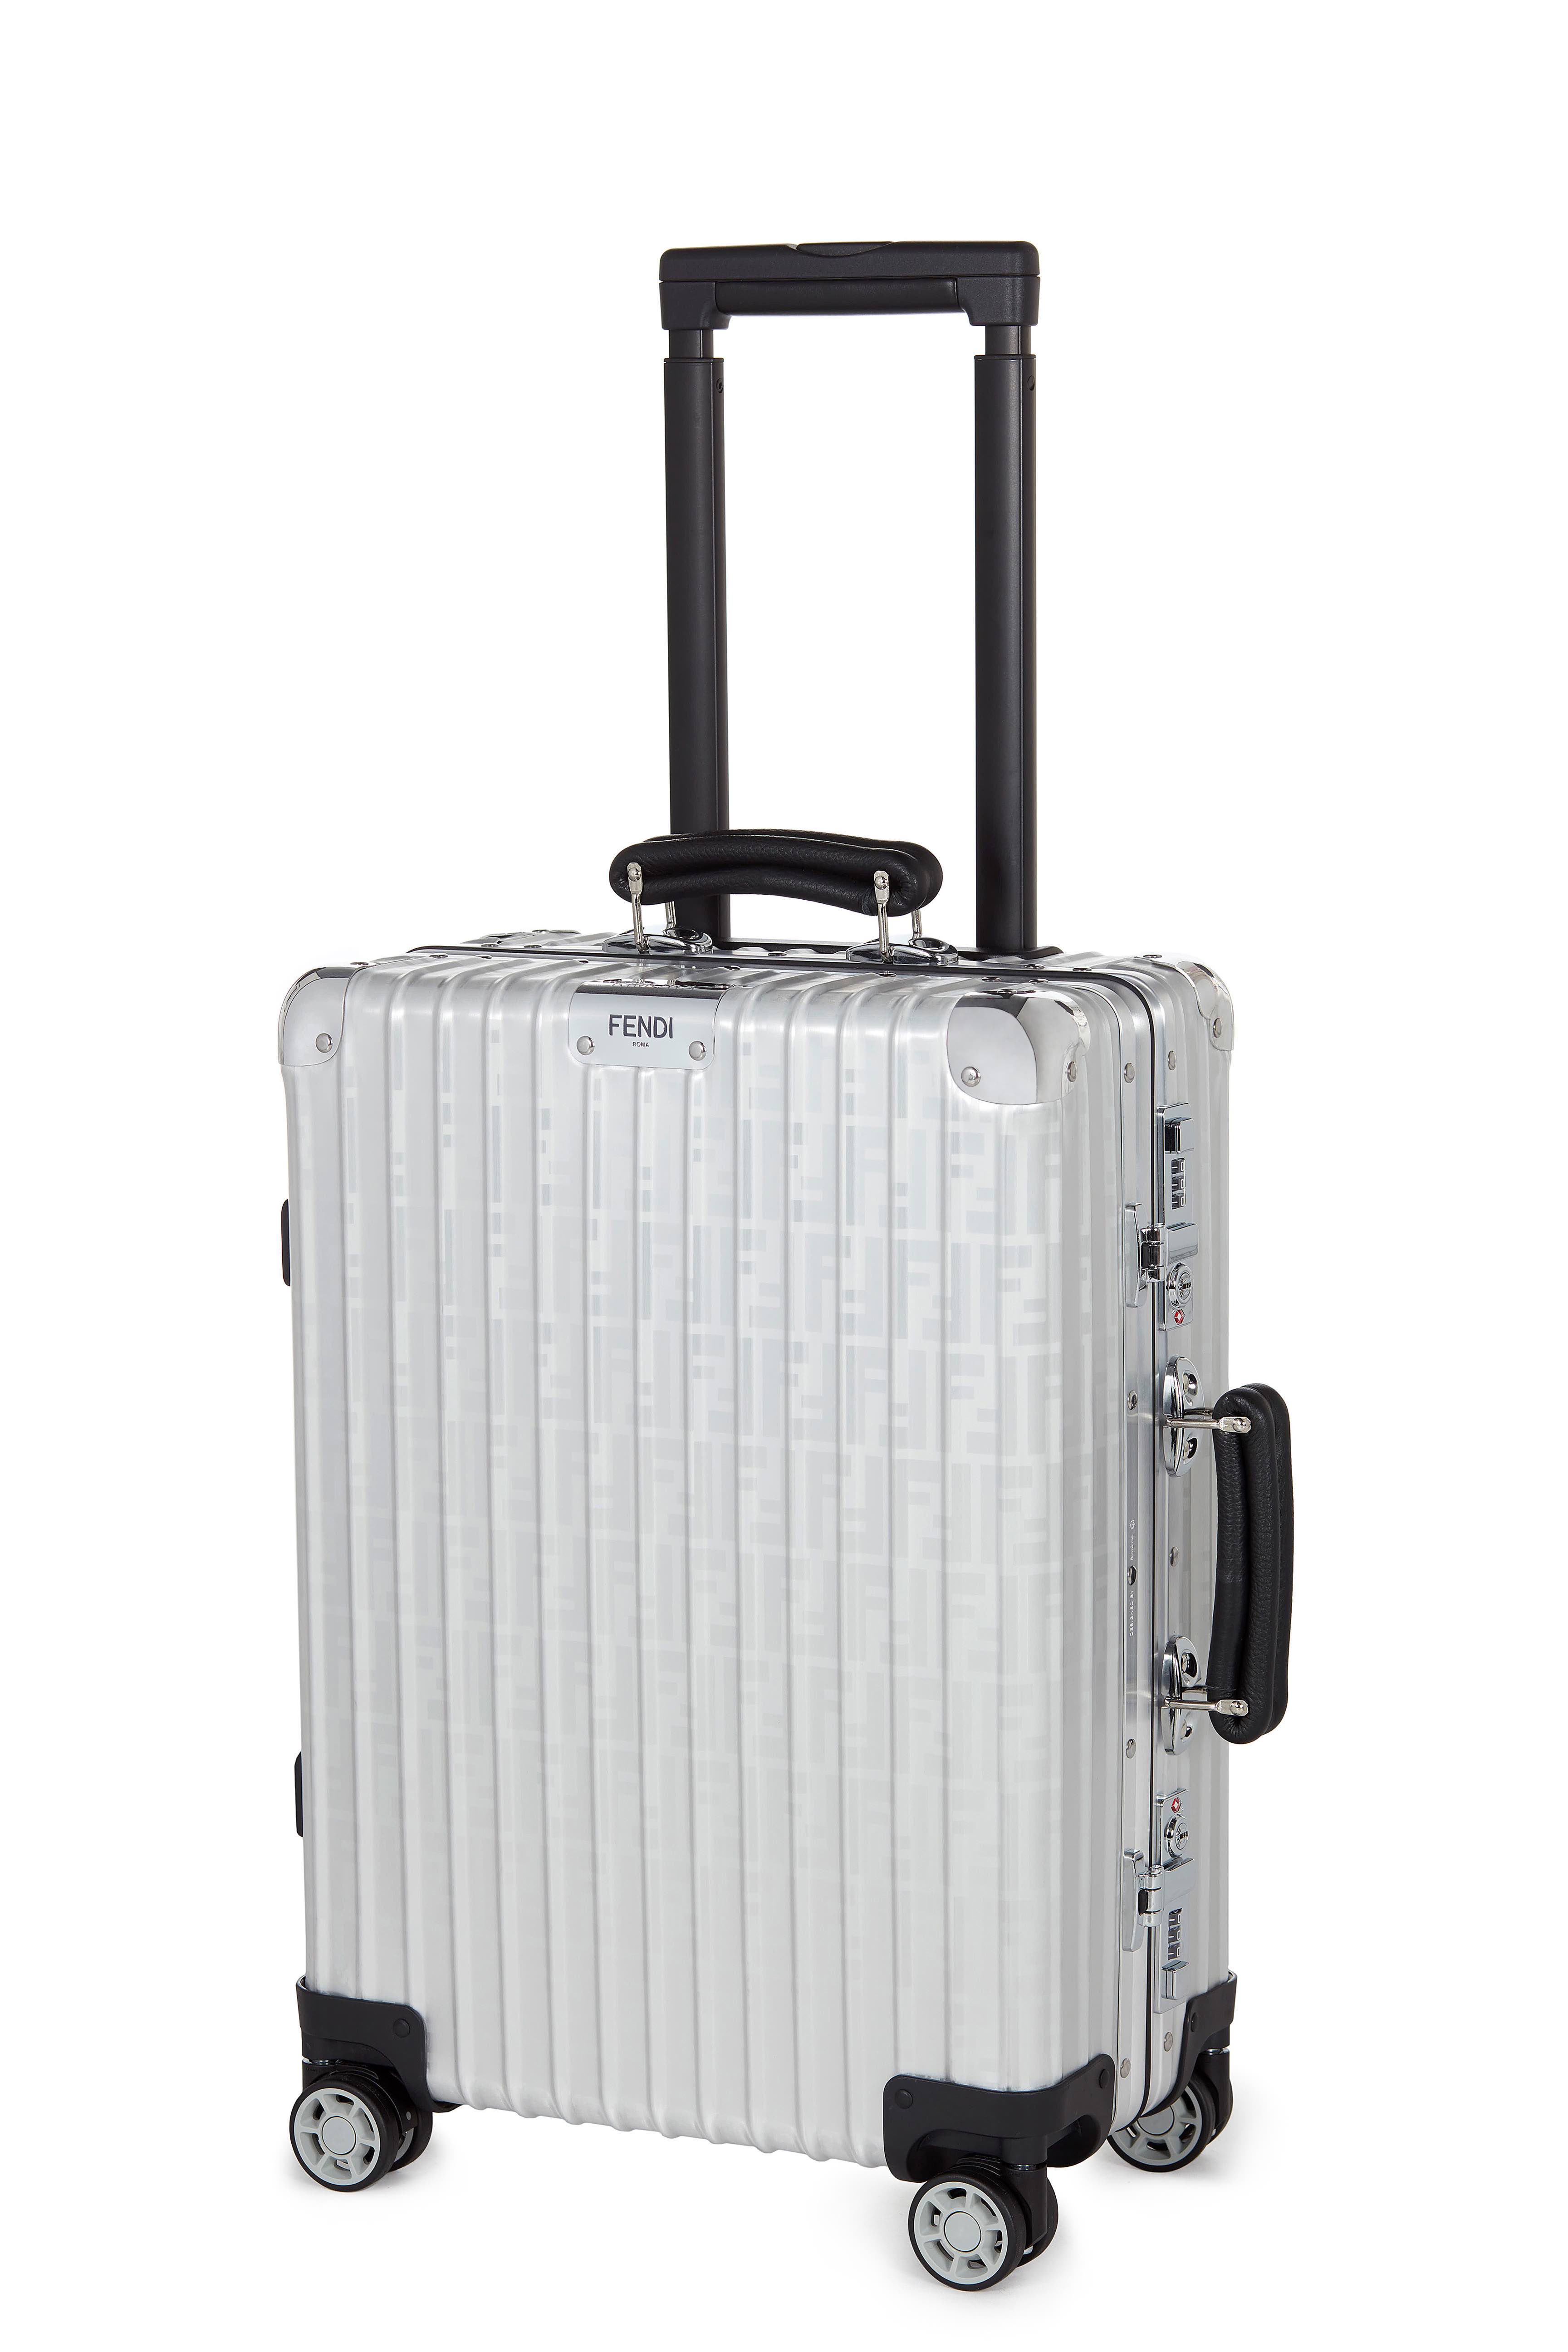 FENDI × RIMOWA 限定版スーツケースを発売 | HIGHSNOBIETY.JP（ハイス 